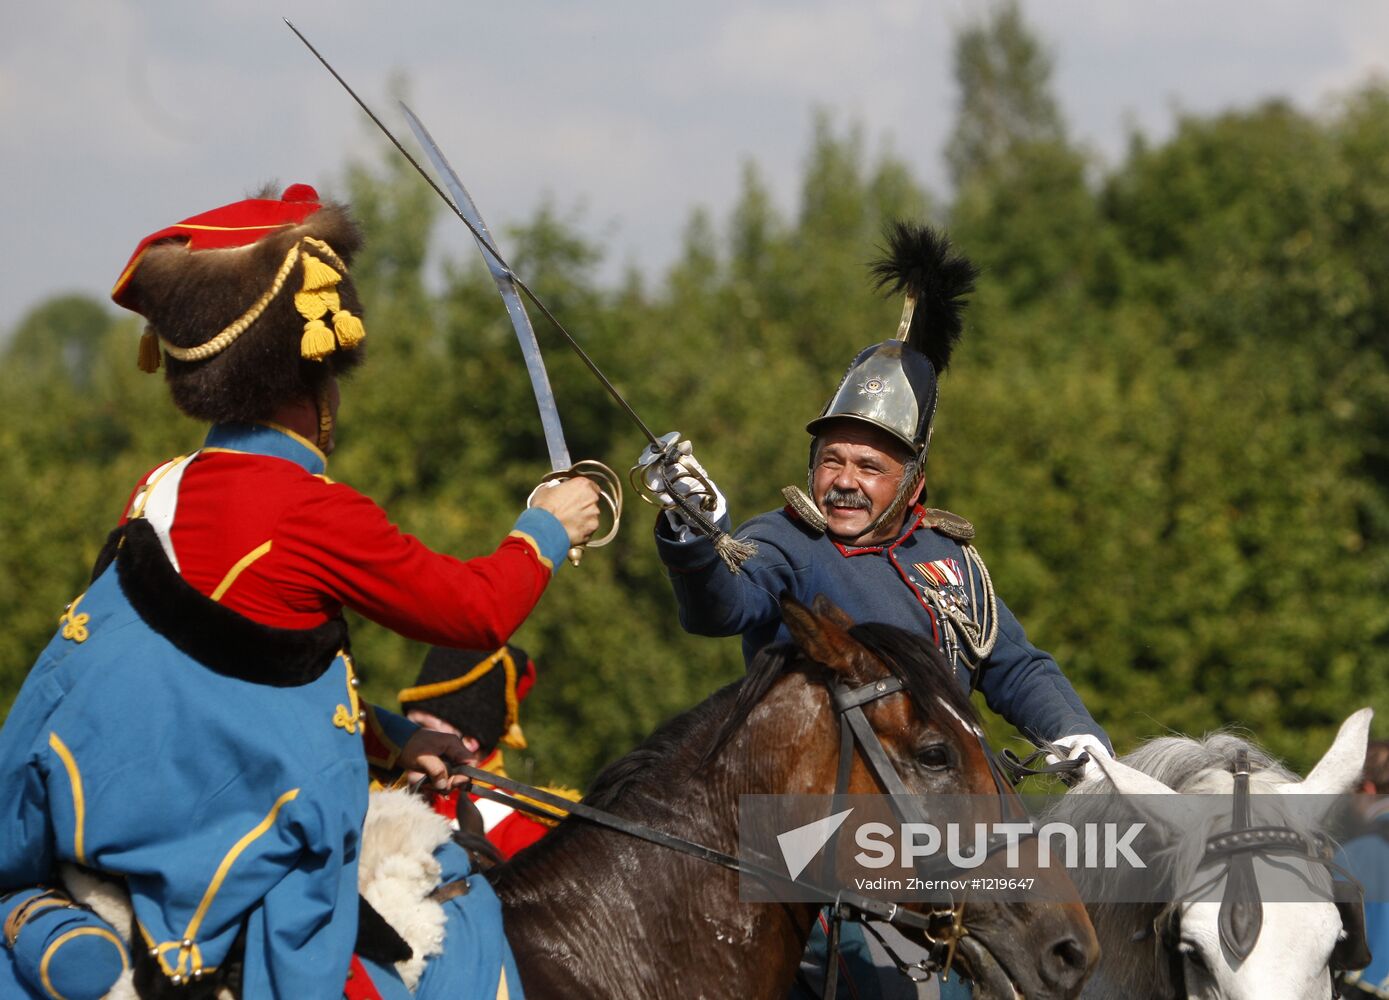 Battle reenactment as part of "Glory of Borodino" festival